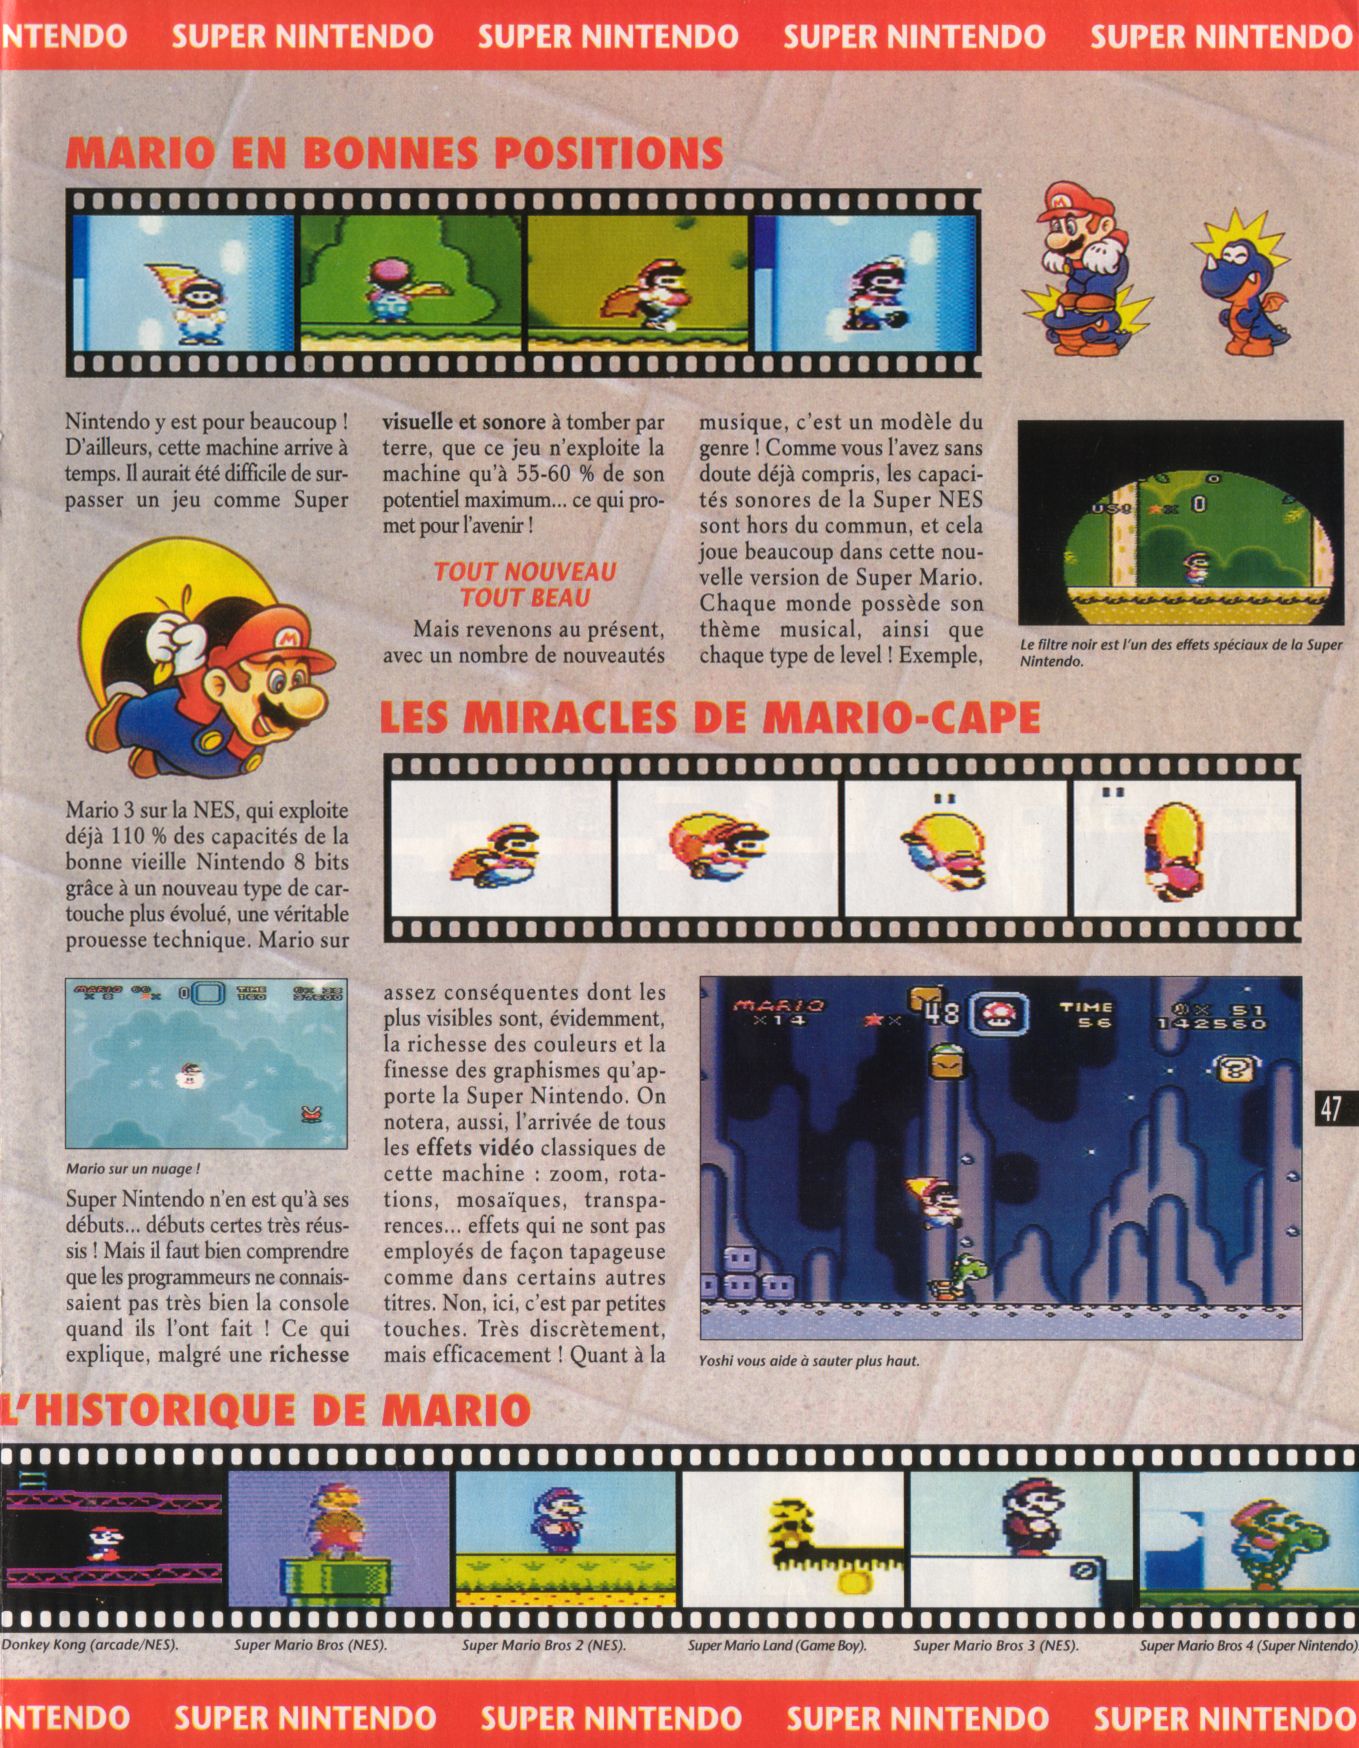 [TEST] Super Mario World (Super Famicom) Player%20One%20019%20-%20Page%20047%20%281992-04%29